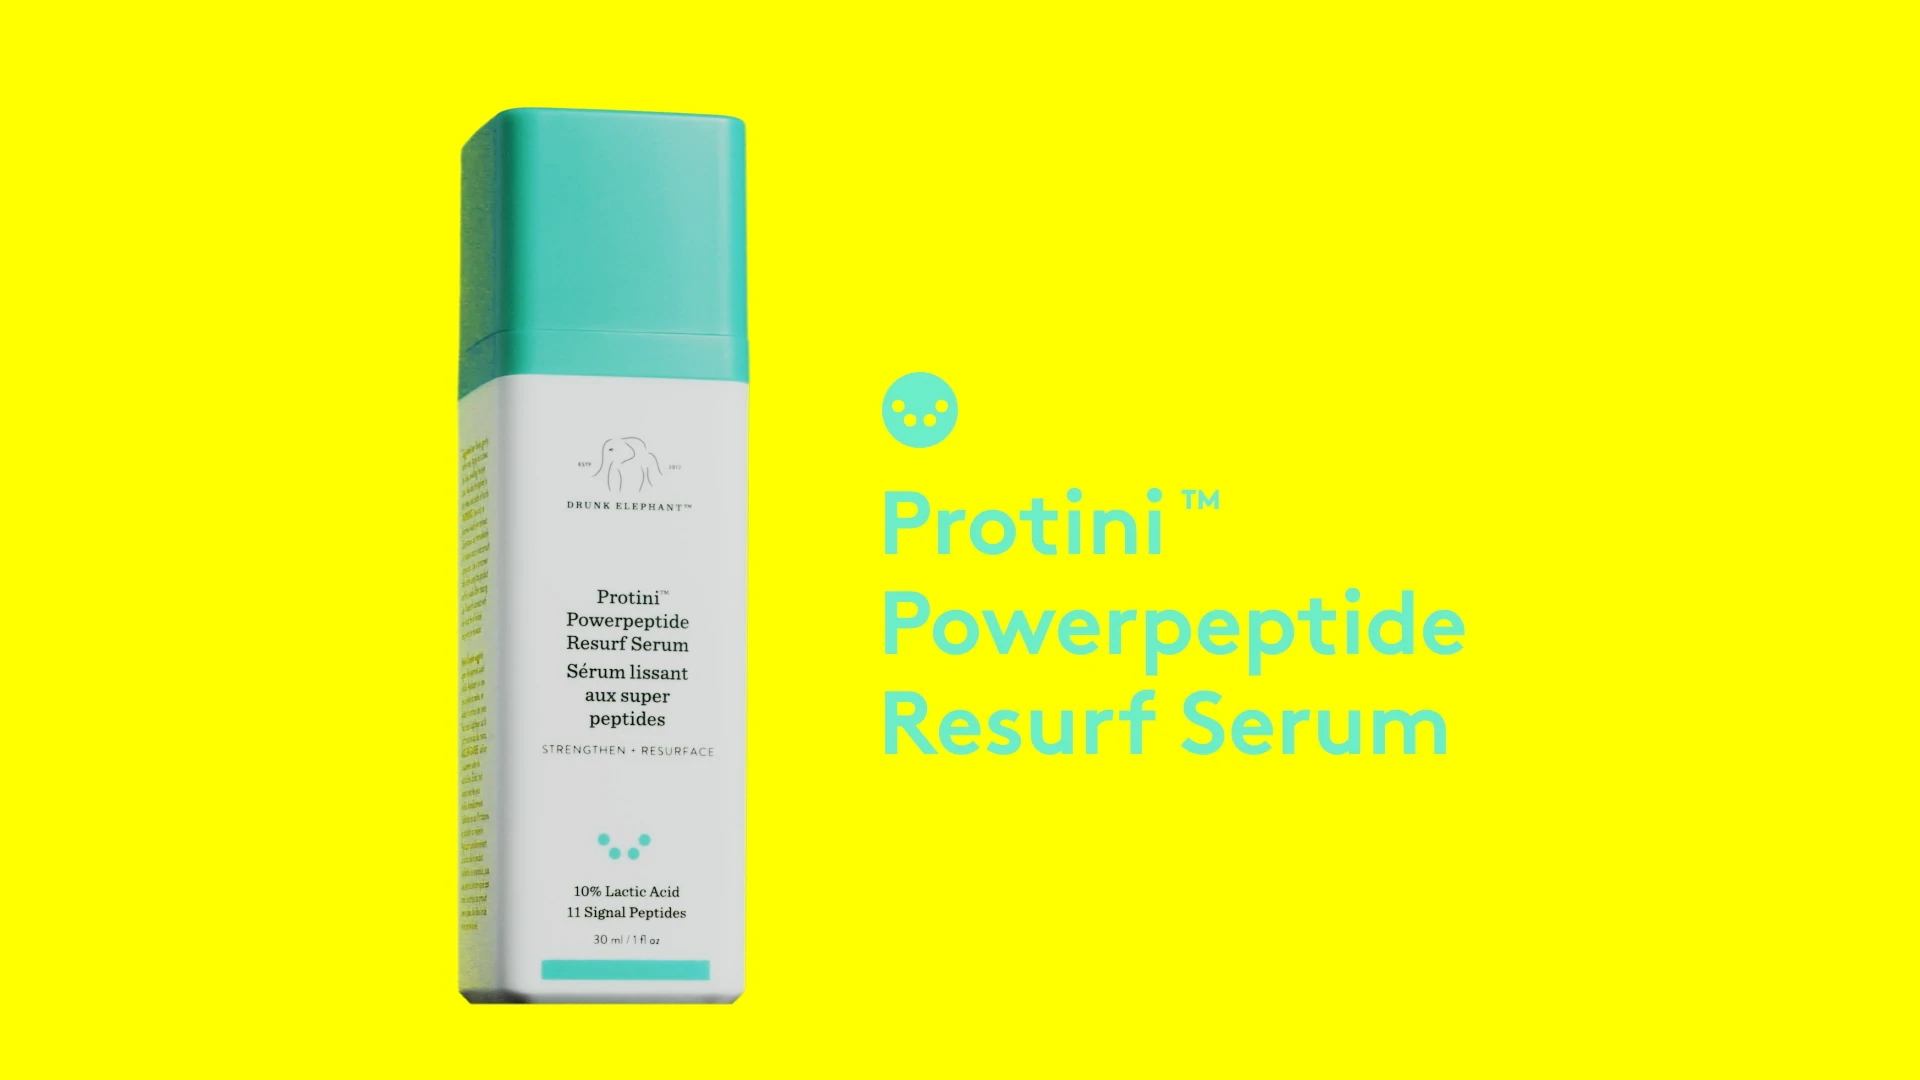 Video detailing how to use Protini Powerpeptide Serum